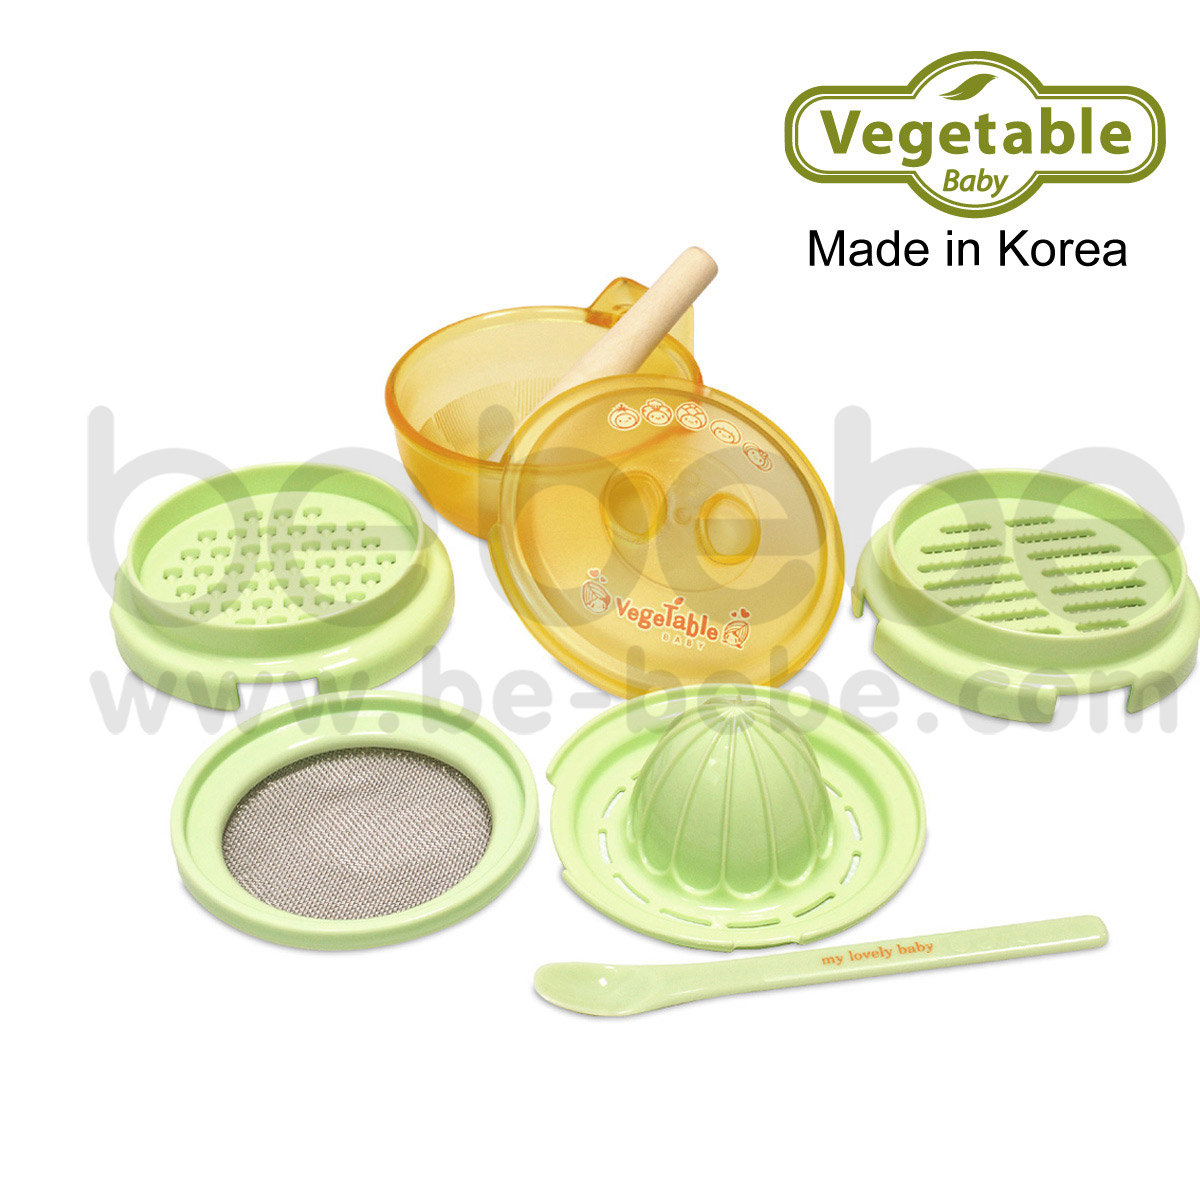 Vegetable : Baby Safe ชุดทำอาหารทำจากข้าวโพด 